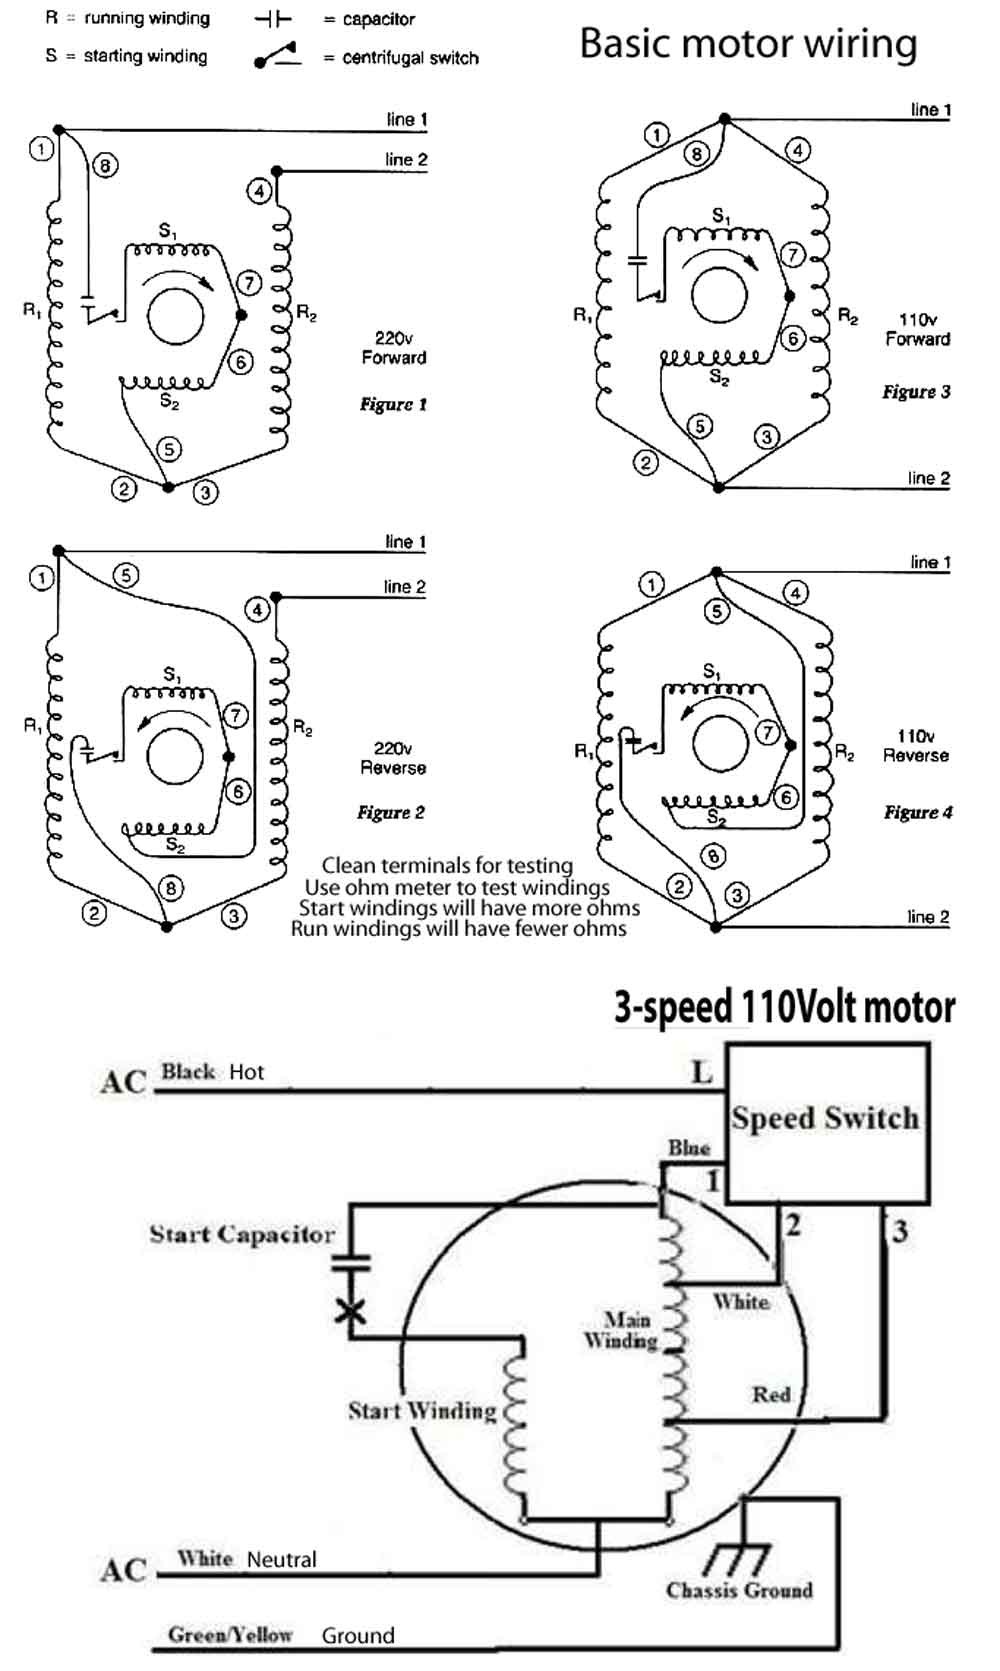 Basic motor wiring illustration